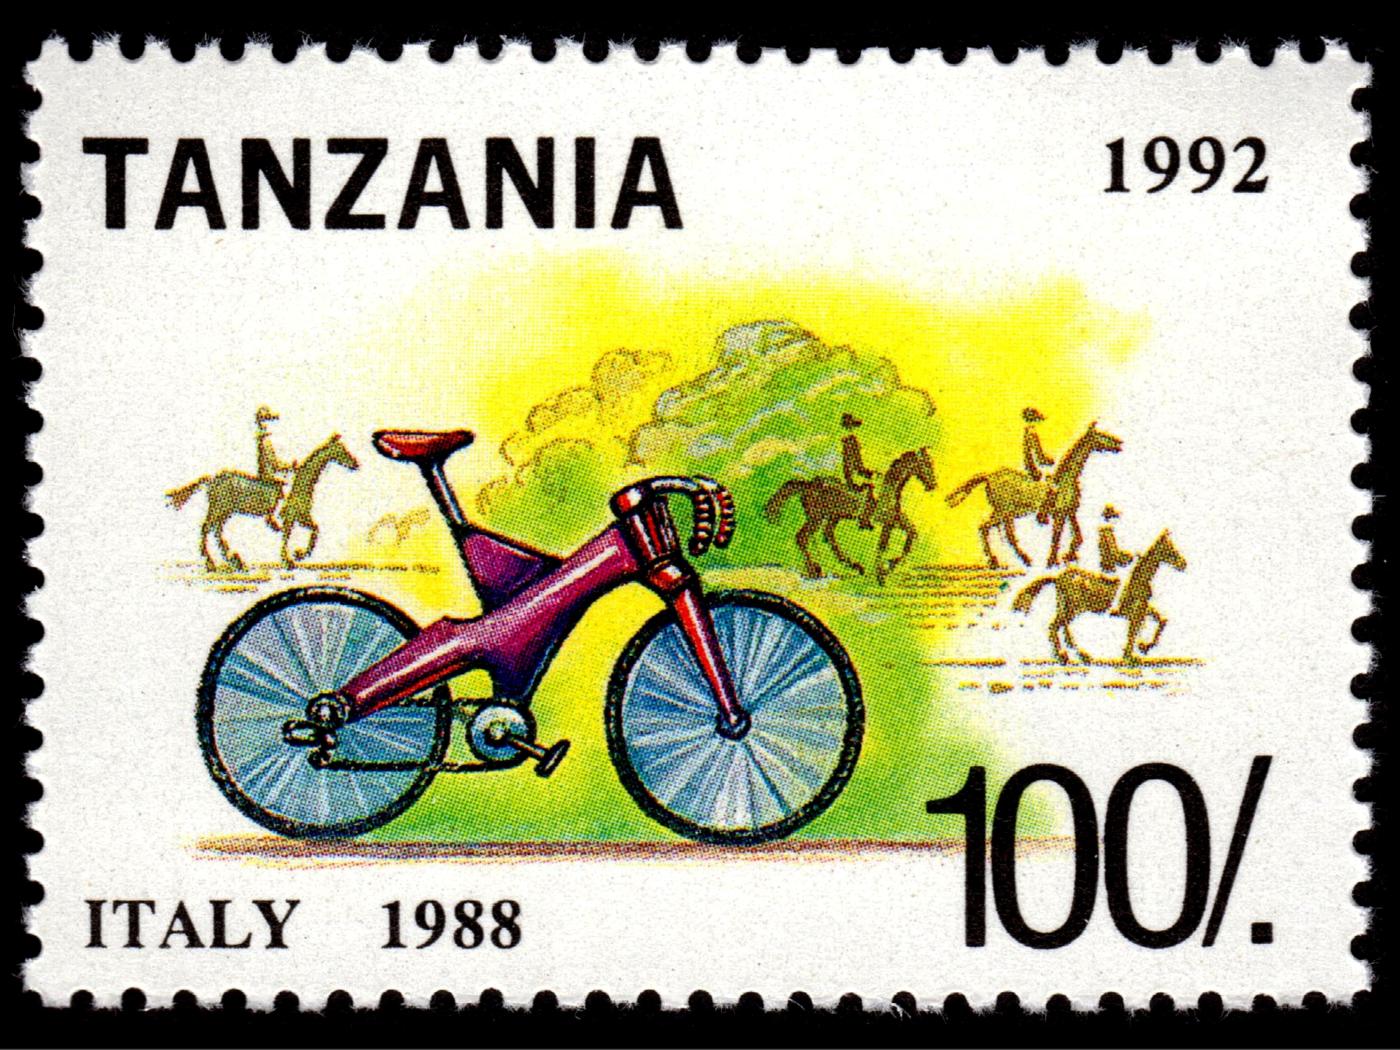 Historie of bikes - Italy 1988